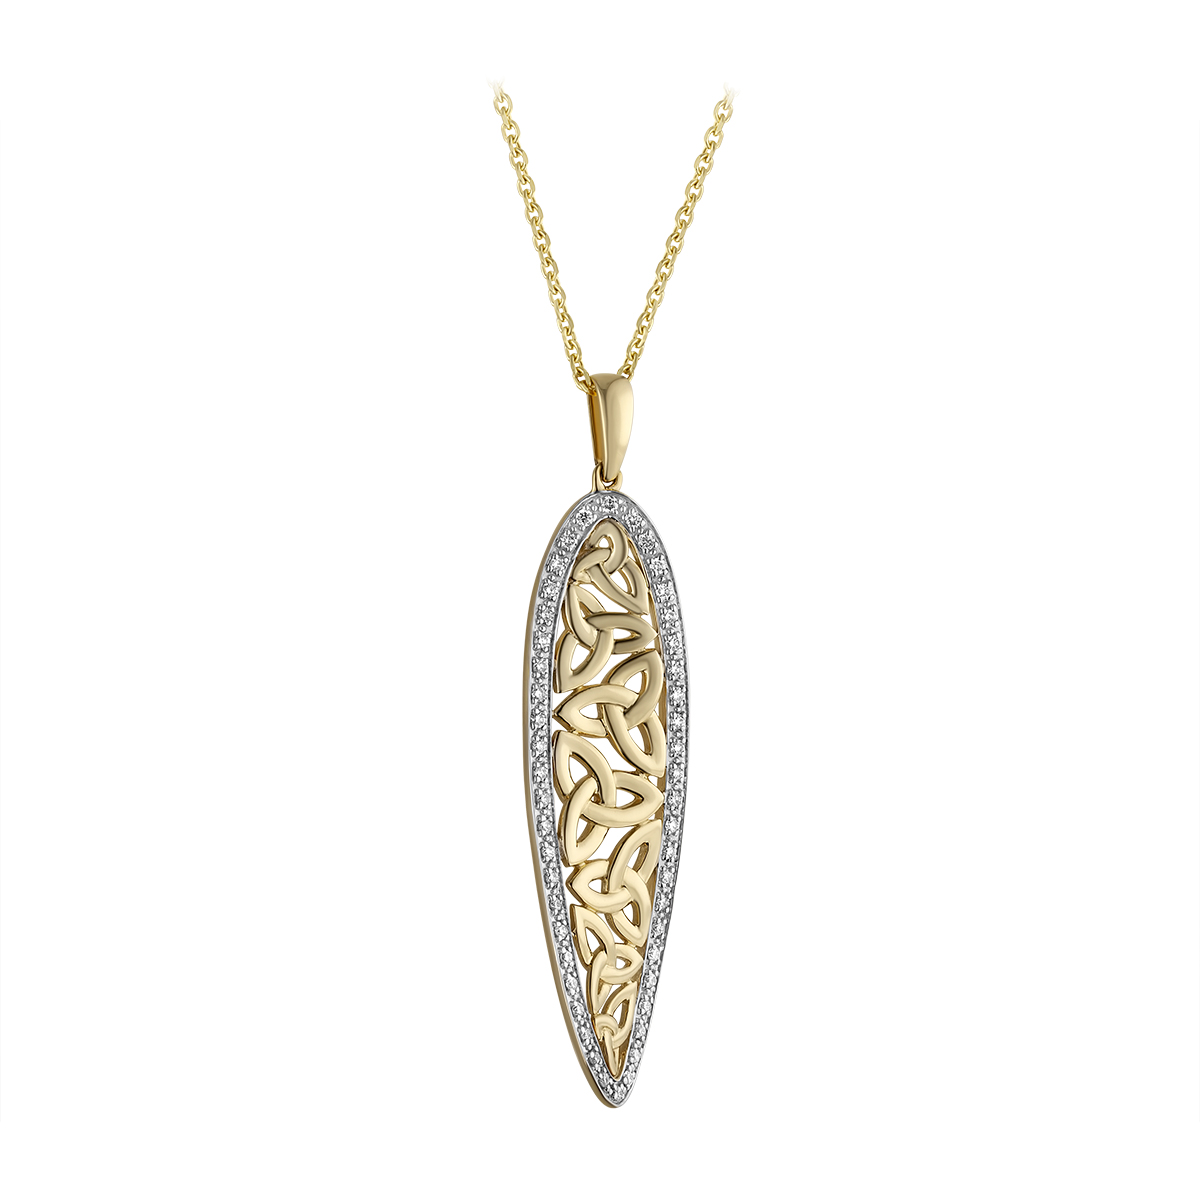 Product image for Irish Necklace | 14k Gold Diamond Celtic Trinity Knot Twist Pendant